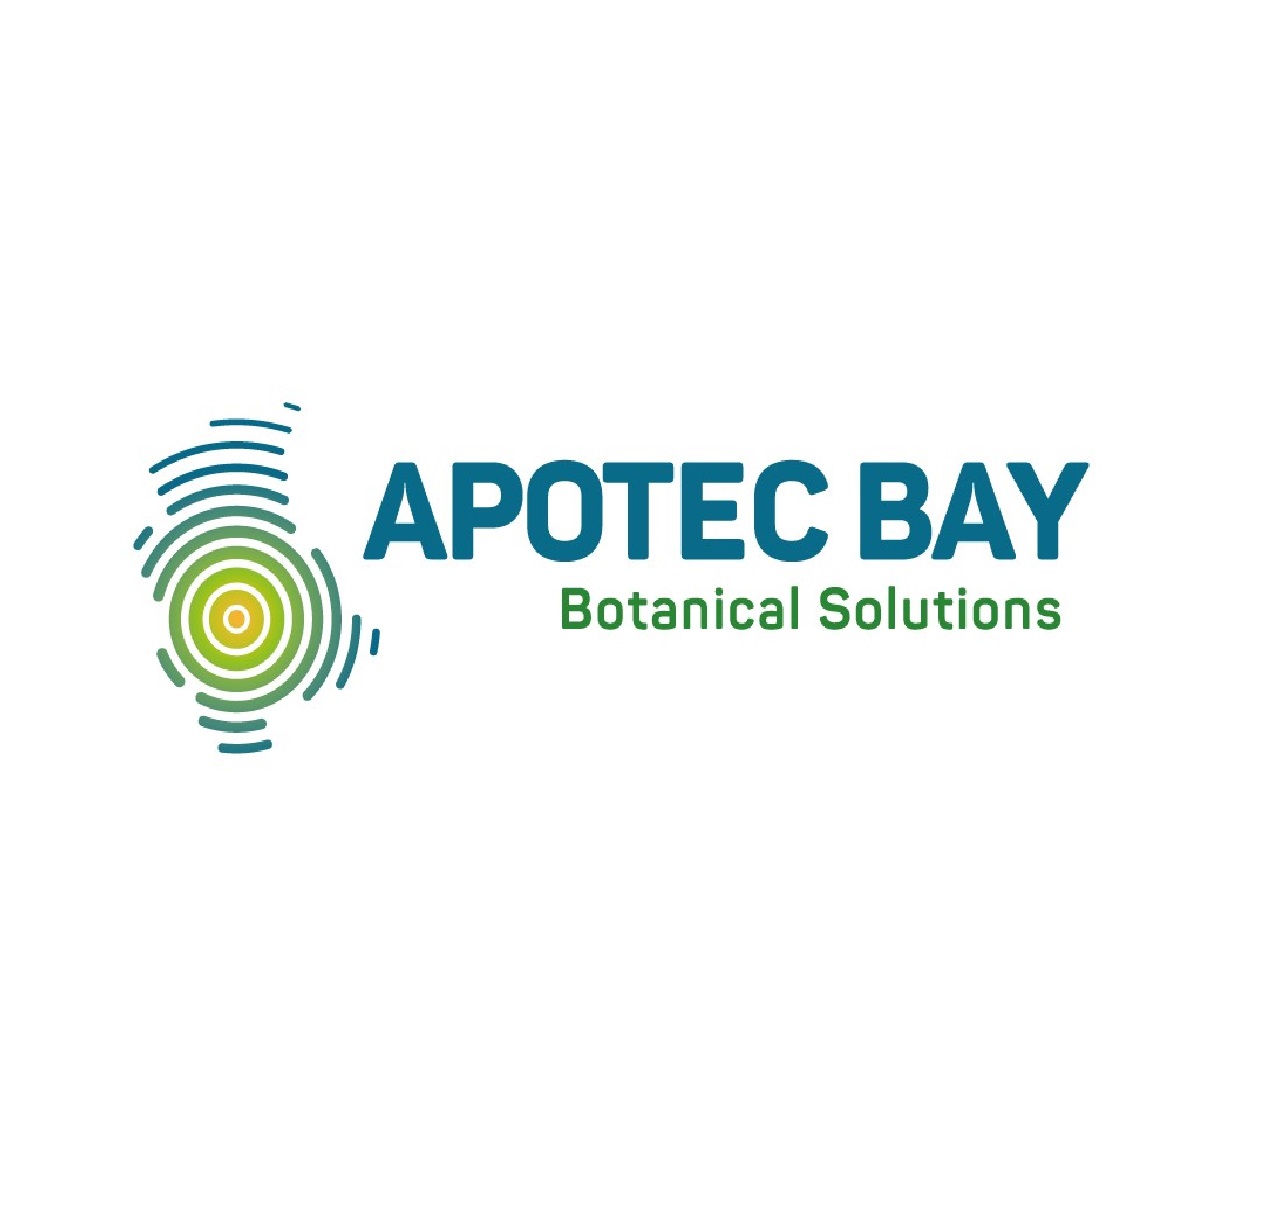 APOTEC BAY Botanical Solutions